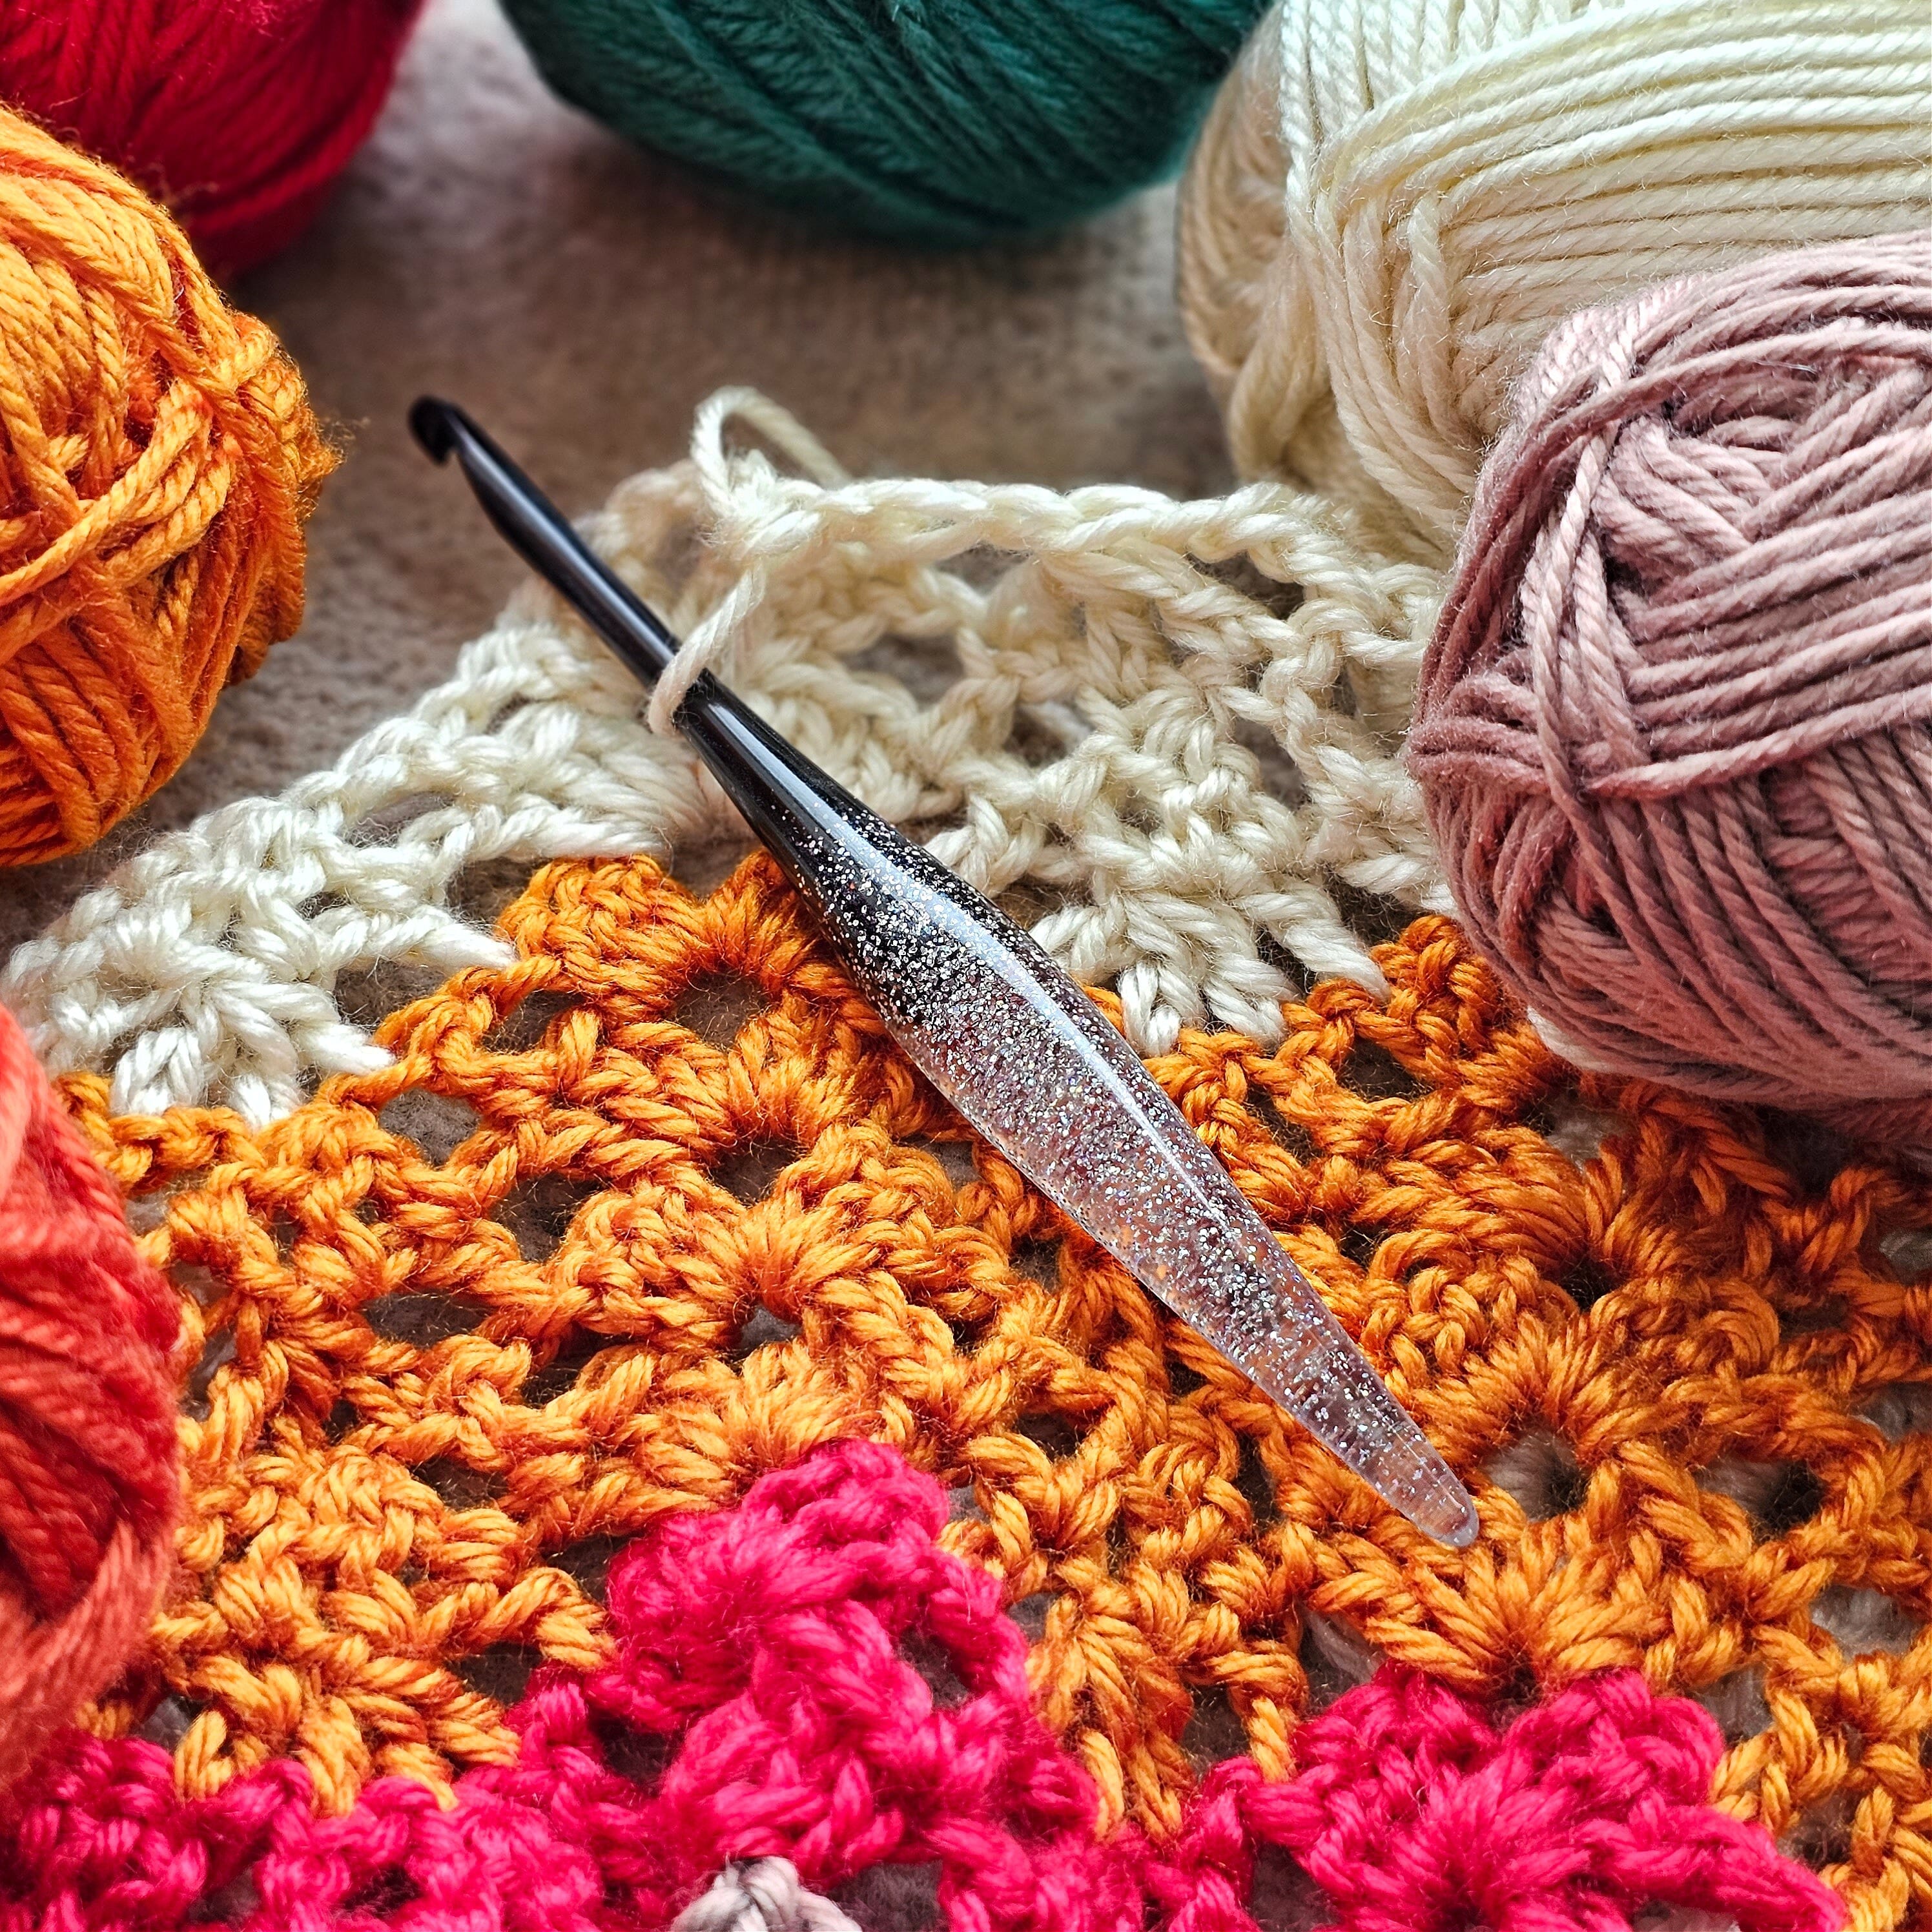 Stock Up & Save on Hook Sets - Furls Crochet